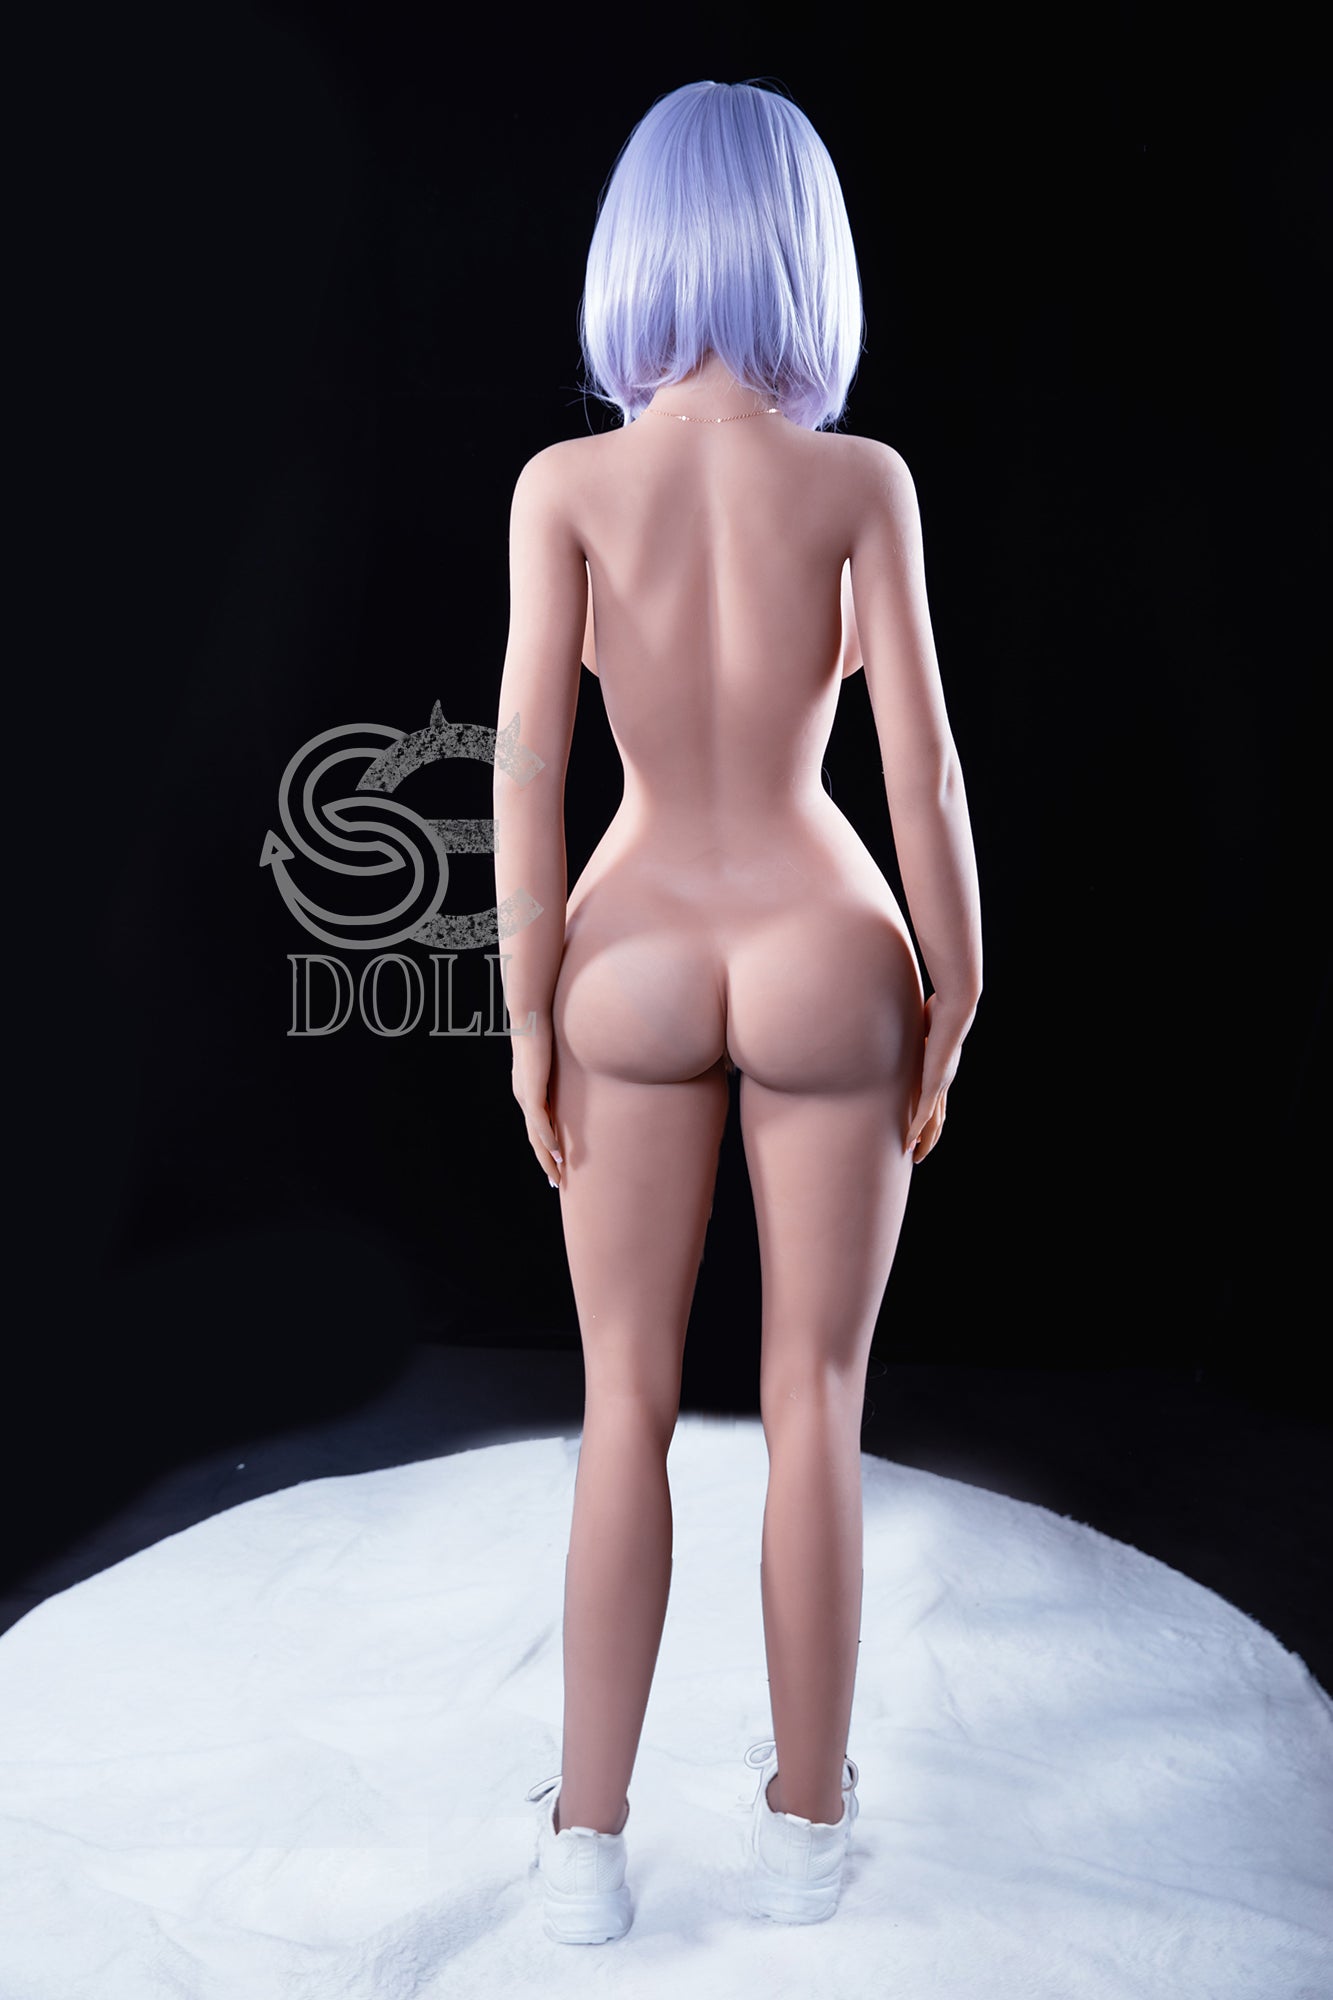 SEDOLL 161 cm F TPE - Rita | Buy Sex Dolls at DOLLS ACTUALLY